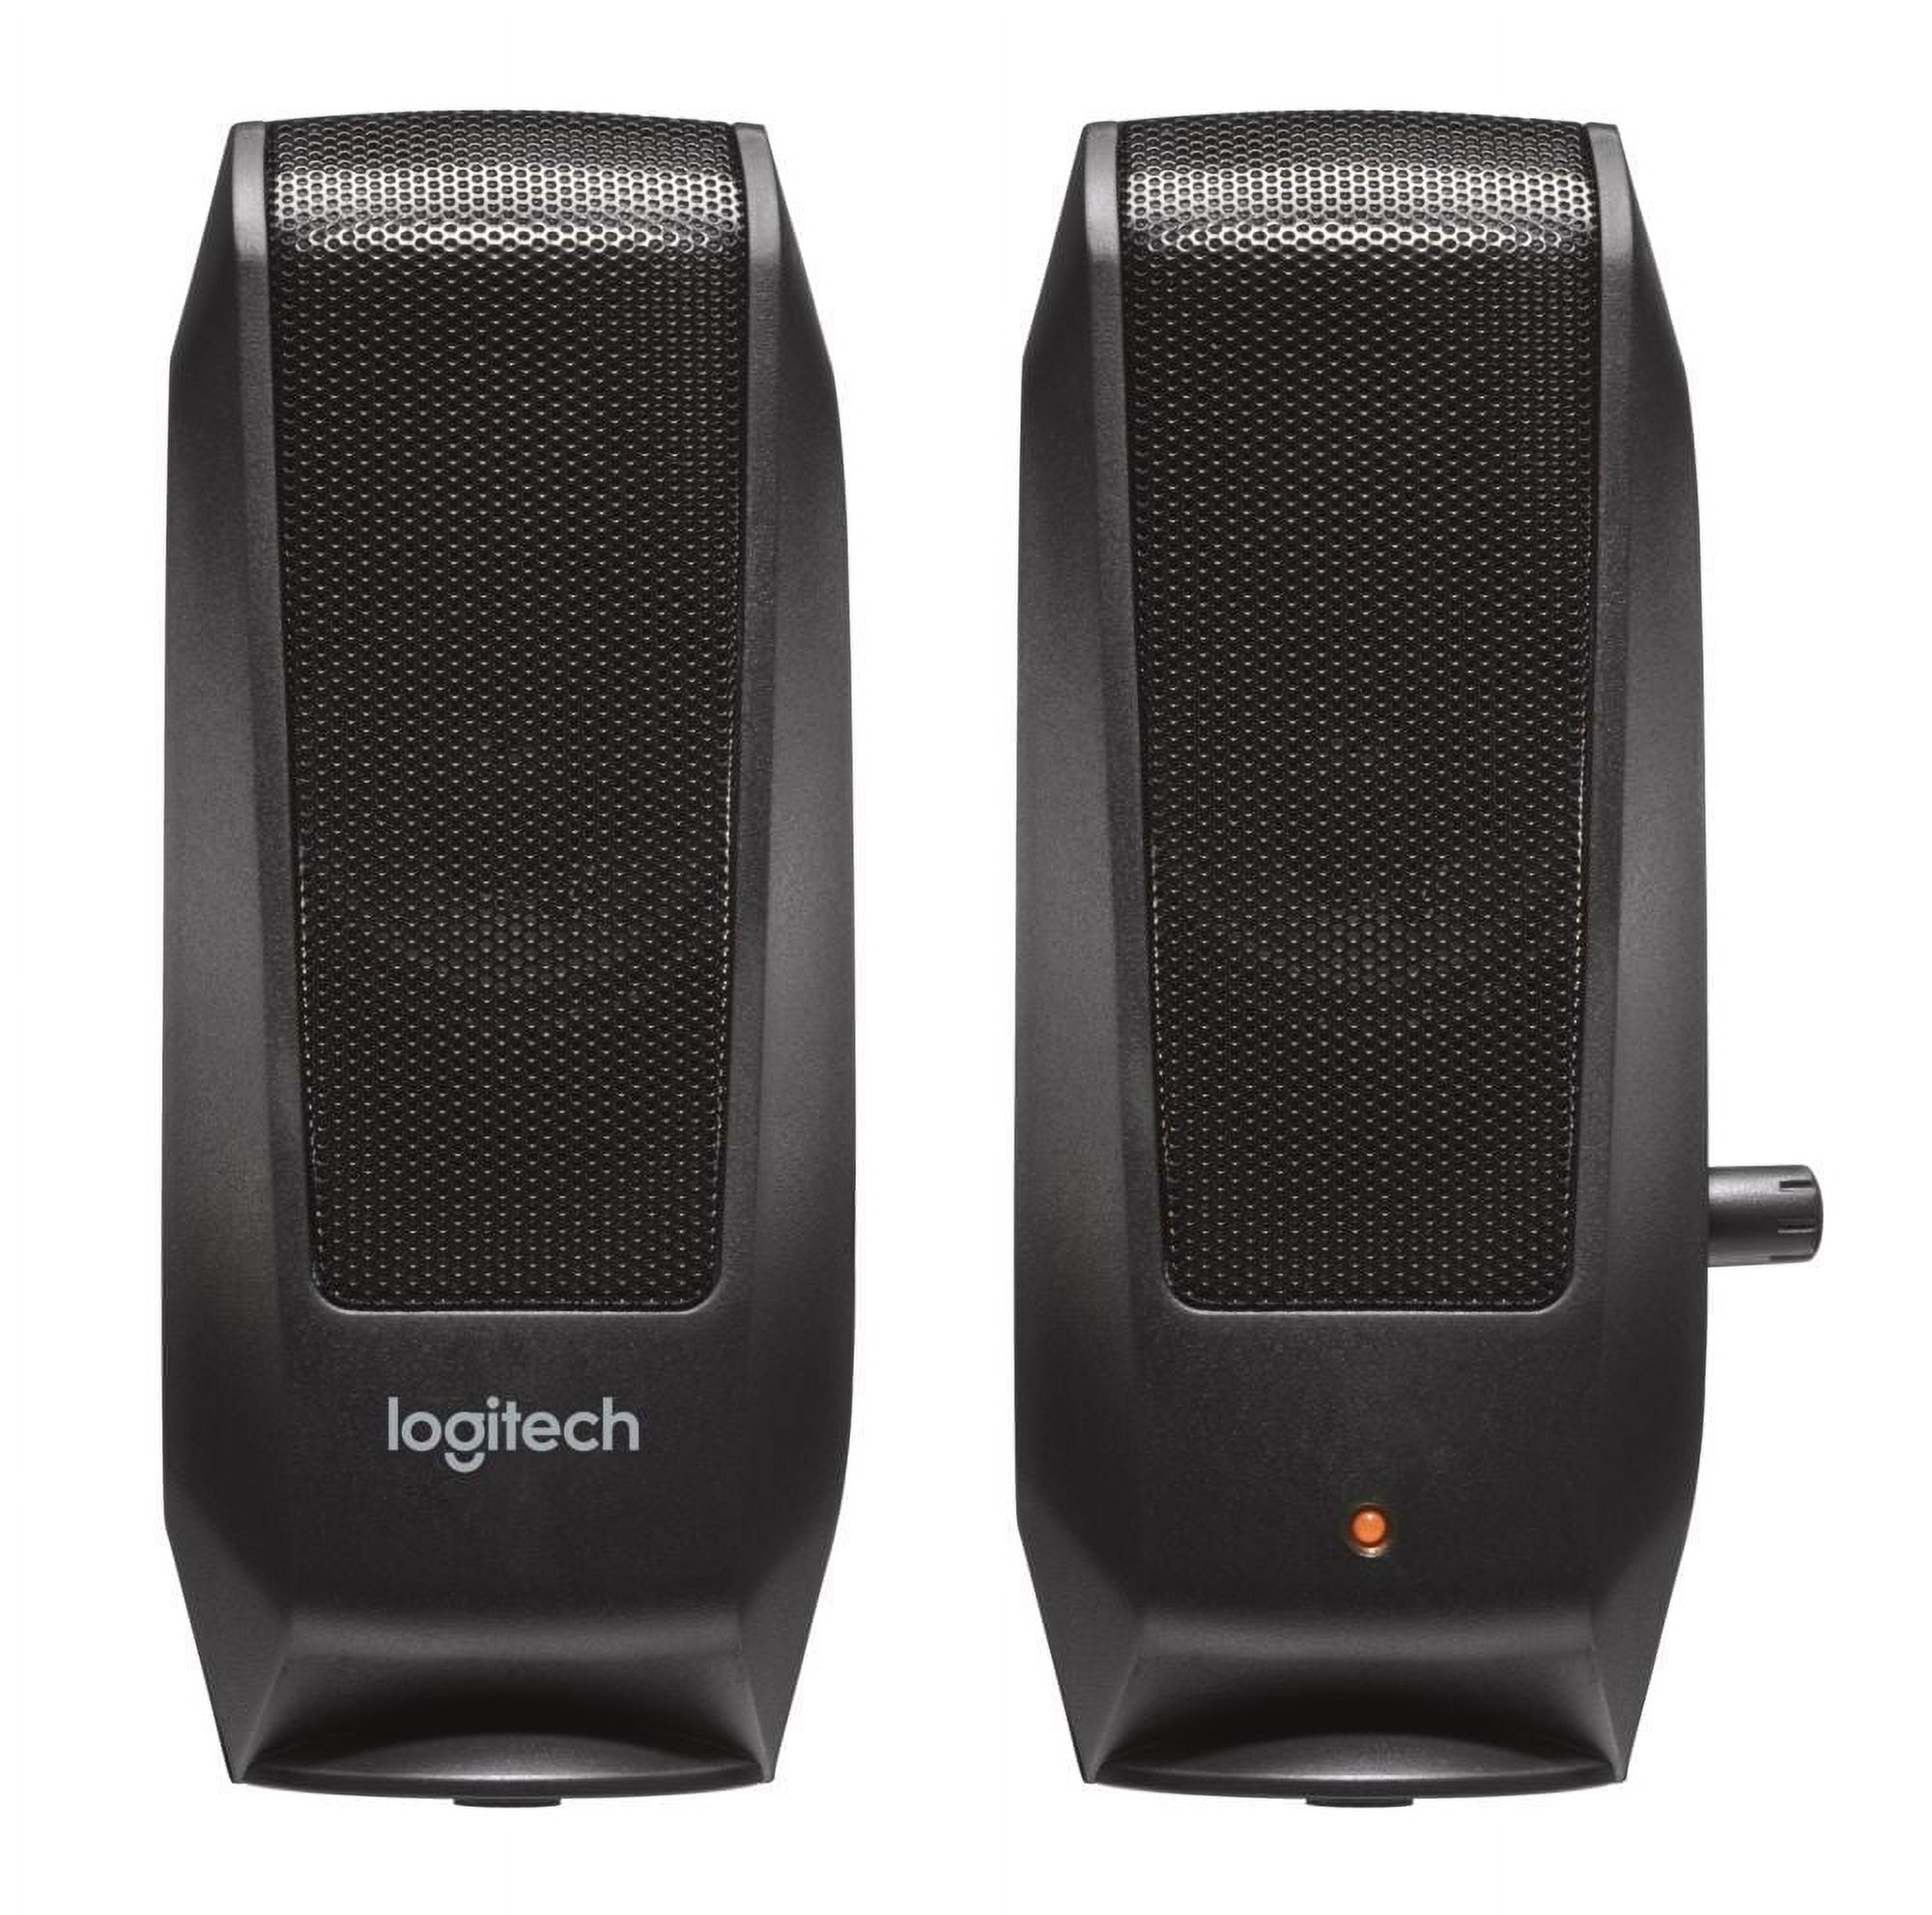 Logitech S120 Desktop Speaker System, Black - image 1 of 3